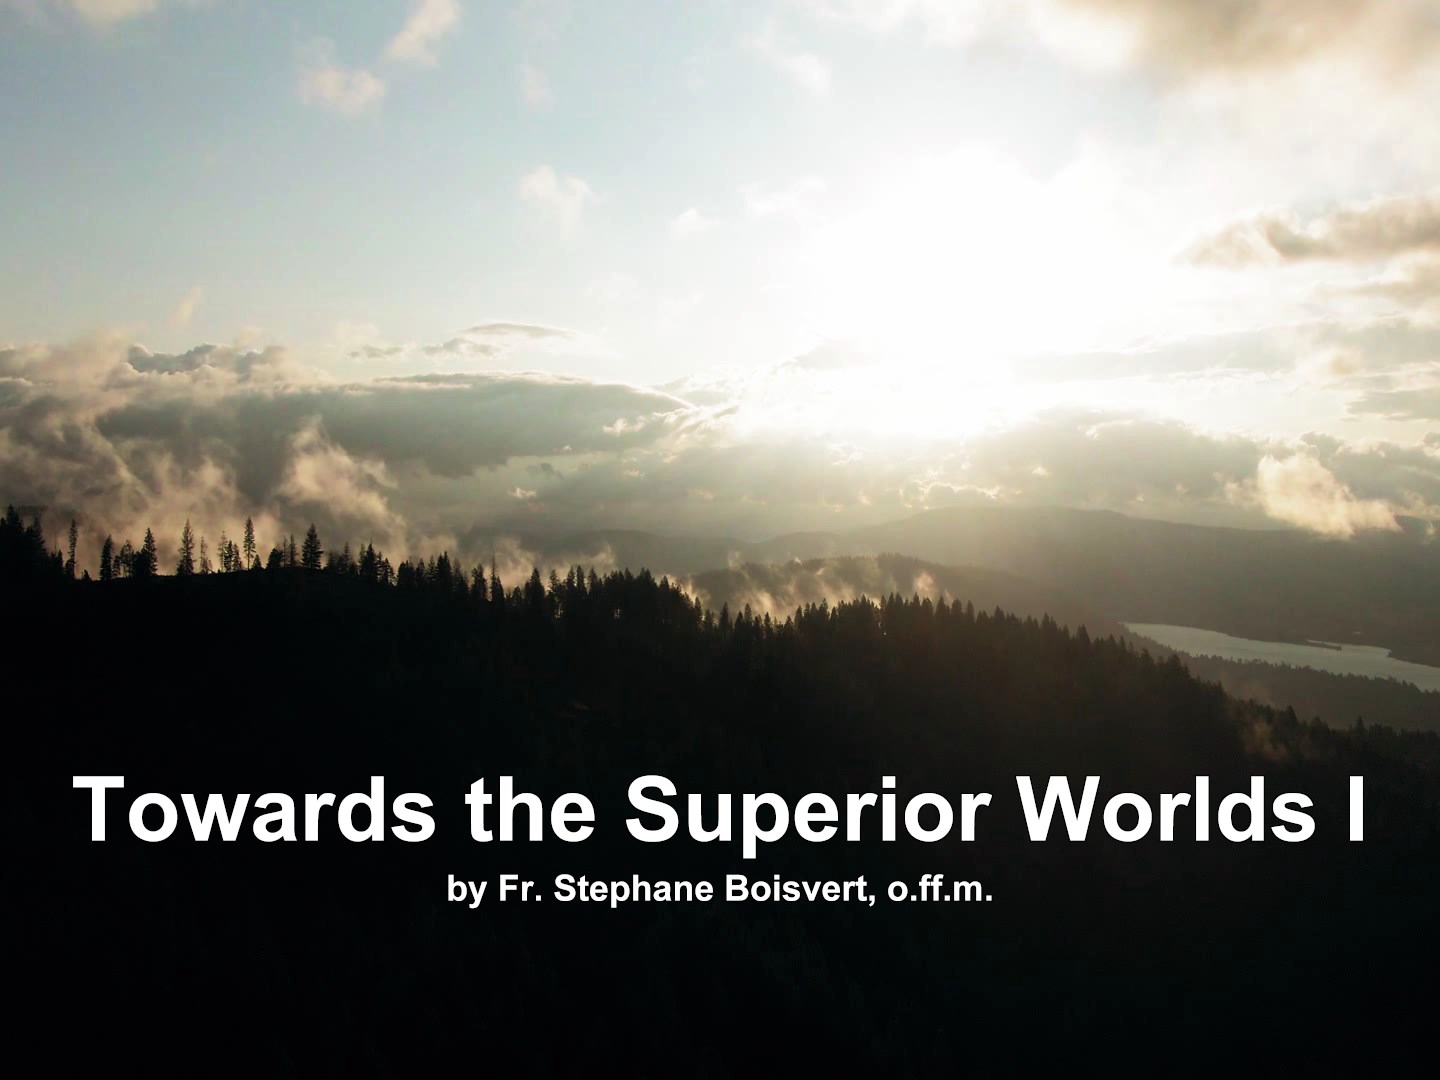 Vers les mondes supérieurs I|Towards the Superior Worlds I